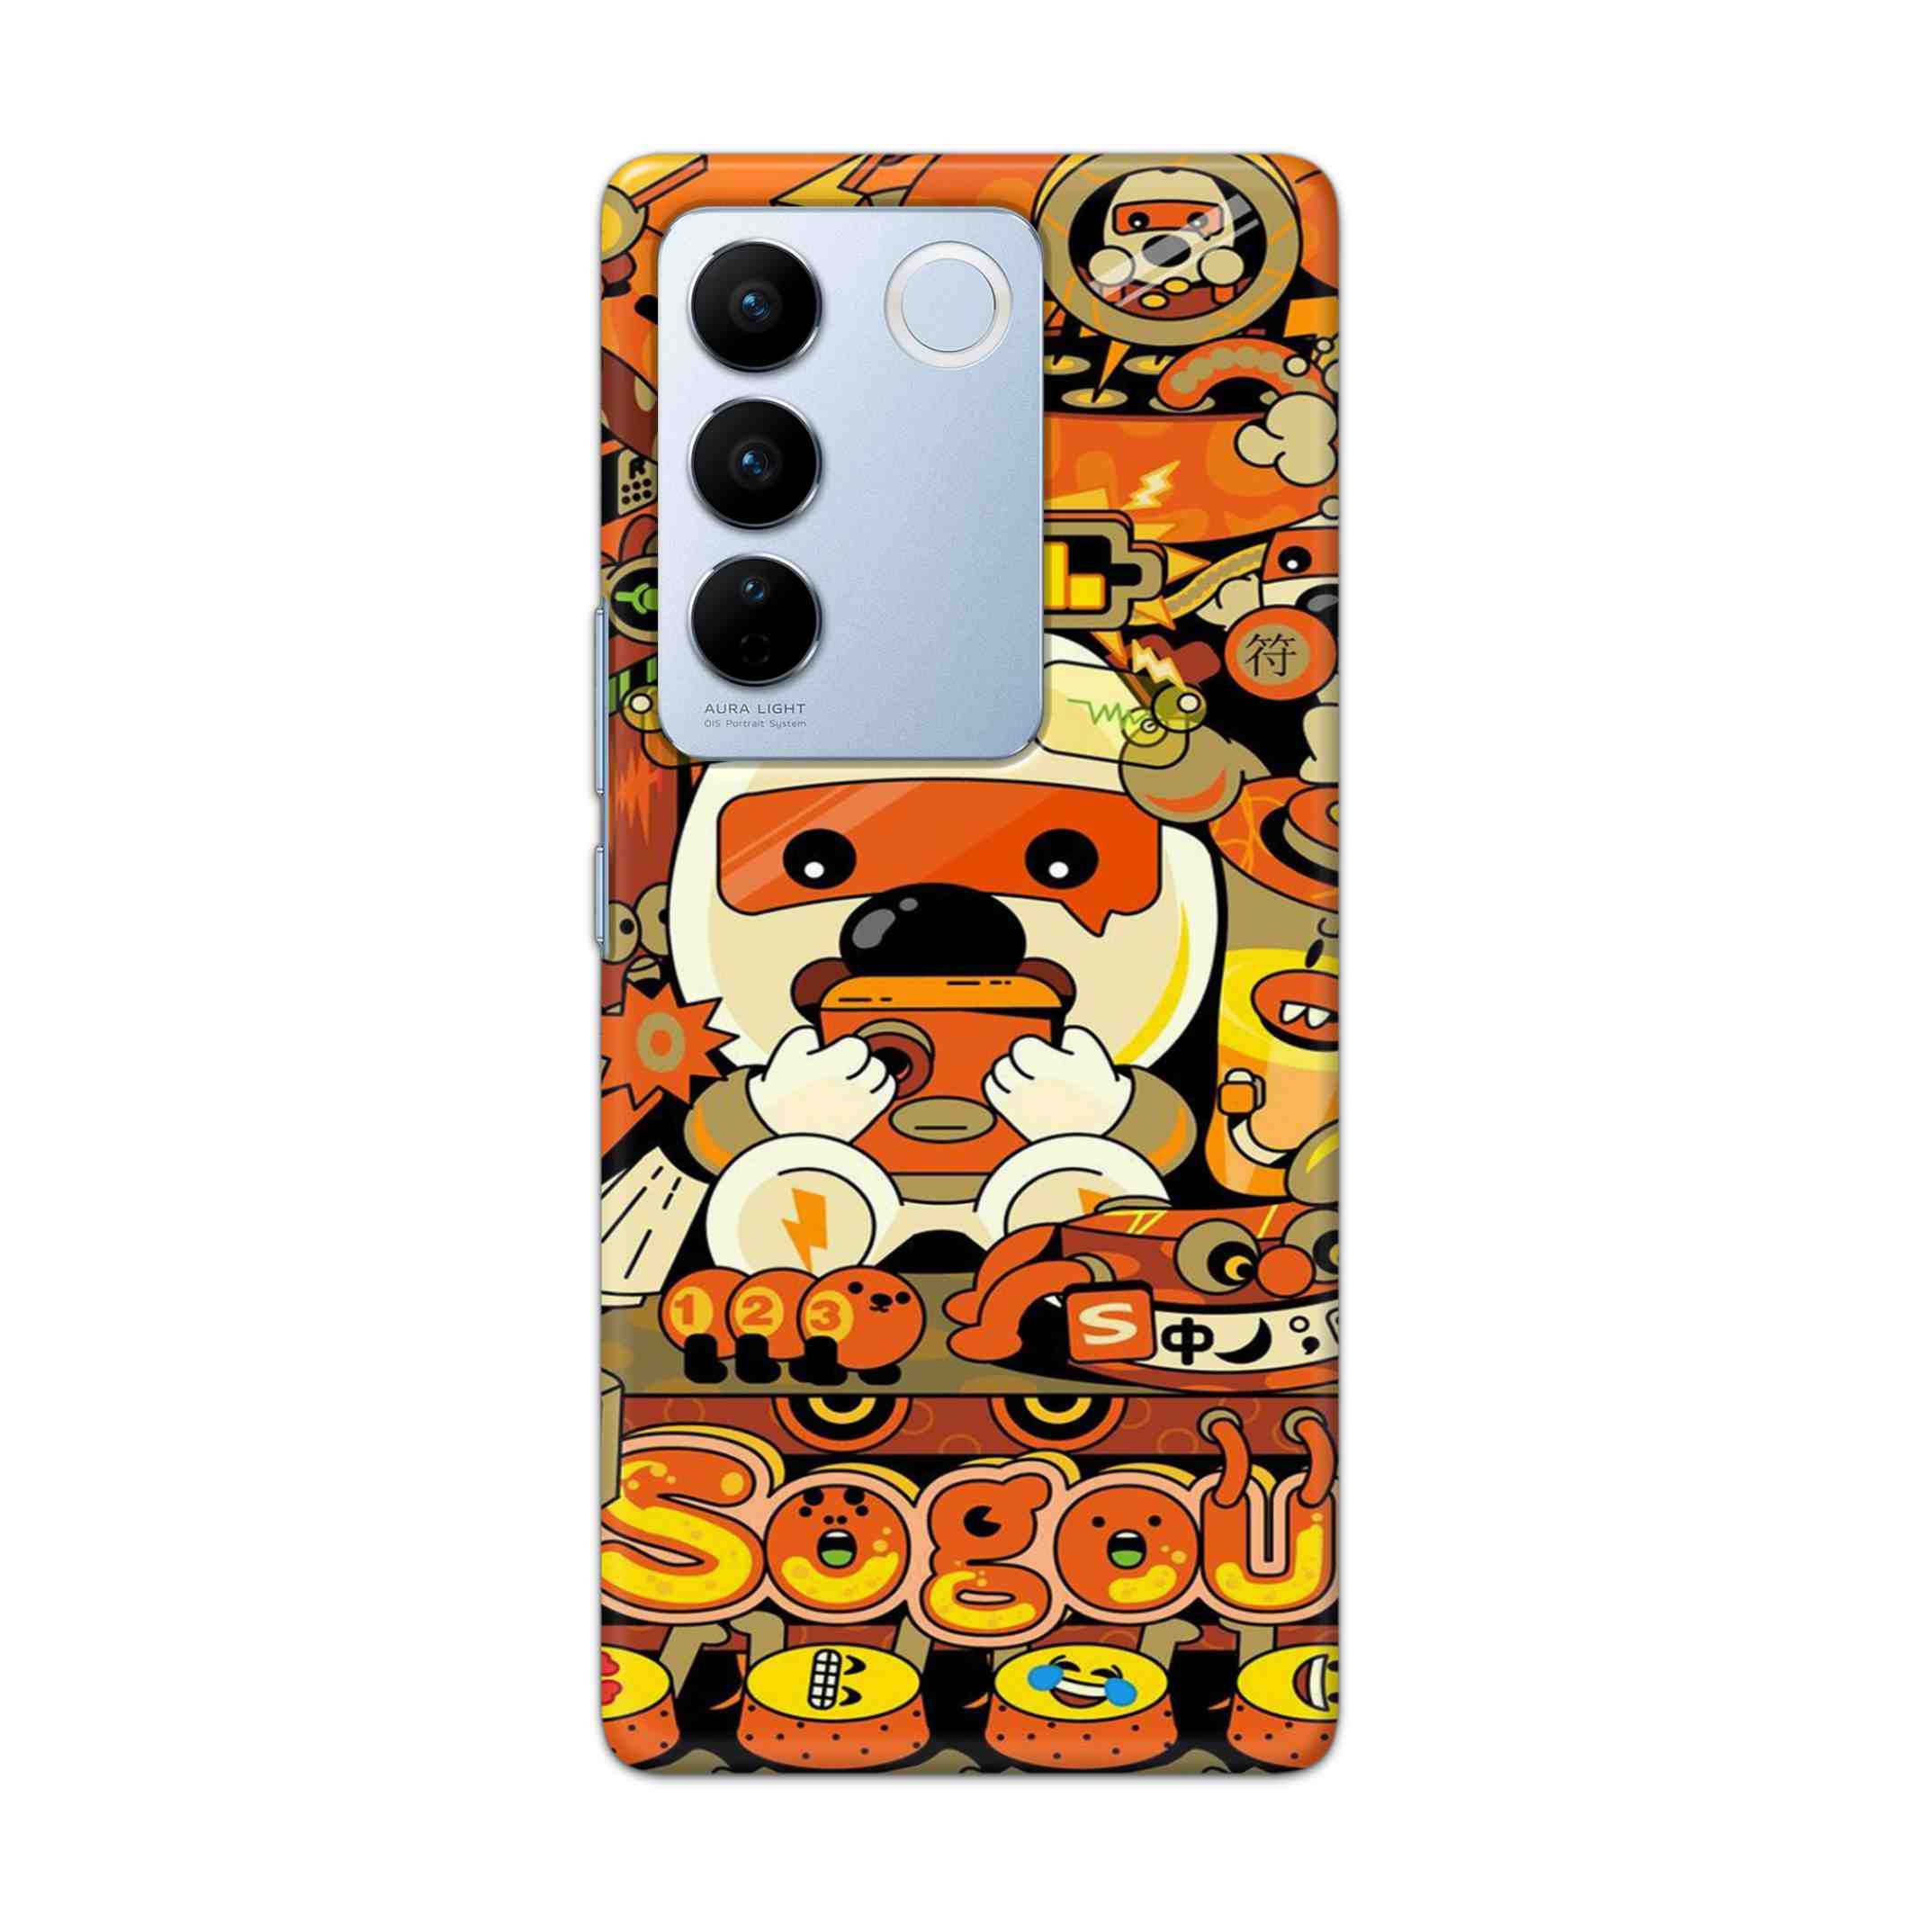 Buy Sogou Hard Back Mobile Phone Case Cover For Vivo V27 Online